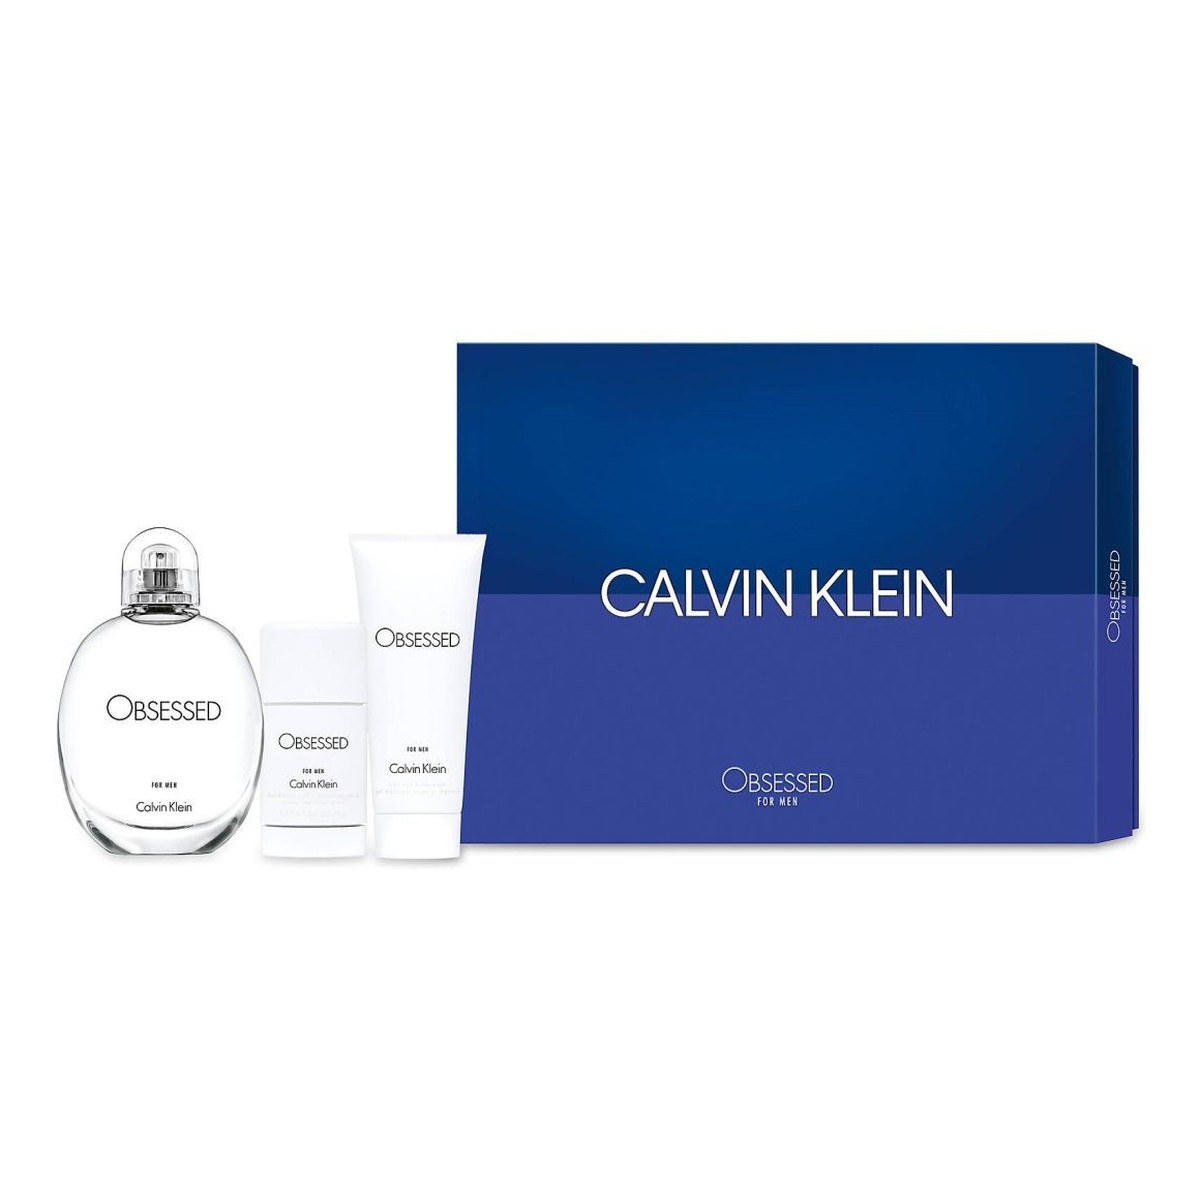 Calvin Klein Obsessed Men zestaw woda toaletowa 125ml + dezodorant 75ml + żel pod prysznic 100ml